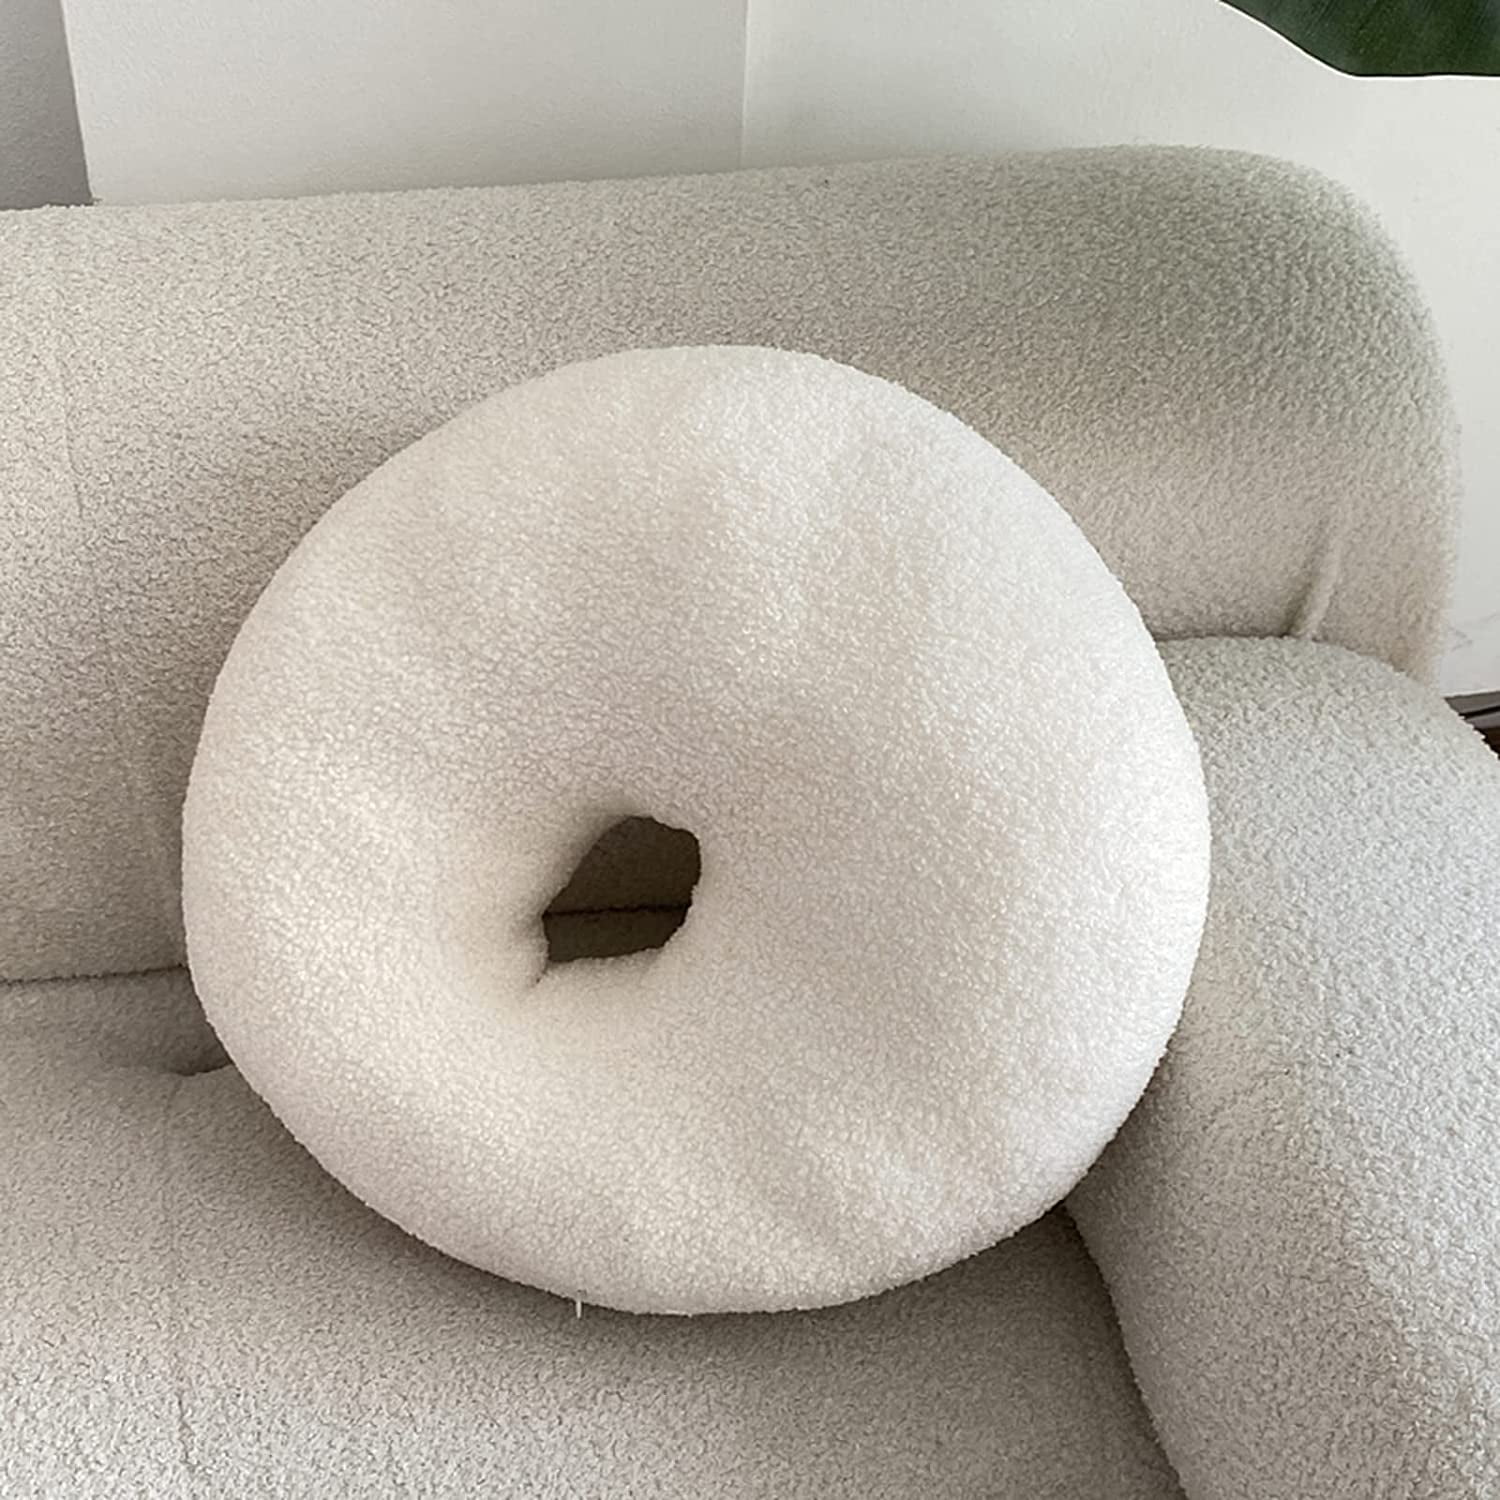 DanceeMangoo Donut Pillow Round Decorative Pillows,15.7 Funny Doughnut  Shaped Throw Pillows for Couch,Boucle Pillow Cute Donut Shaped Pillows for  Sofa,Bedroom 